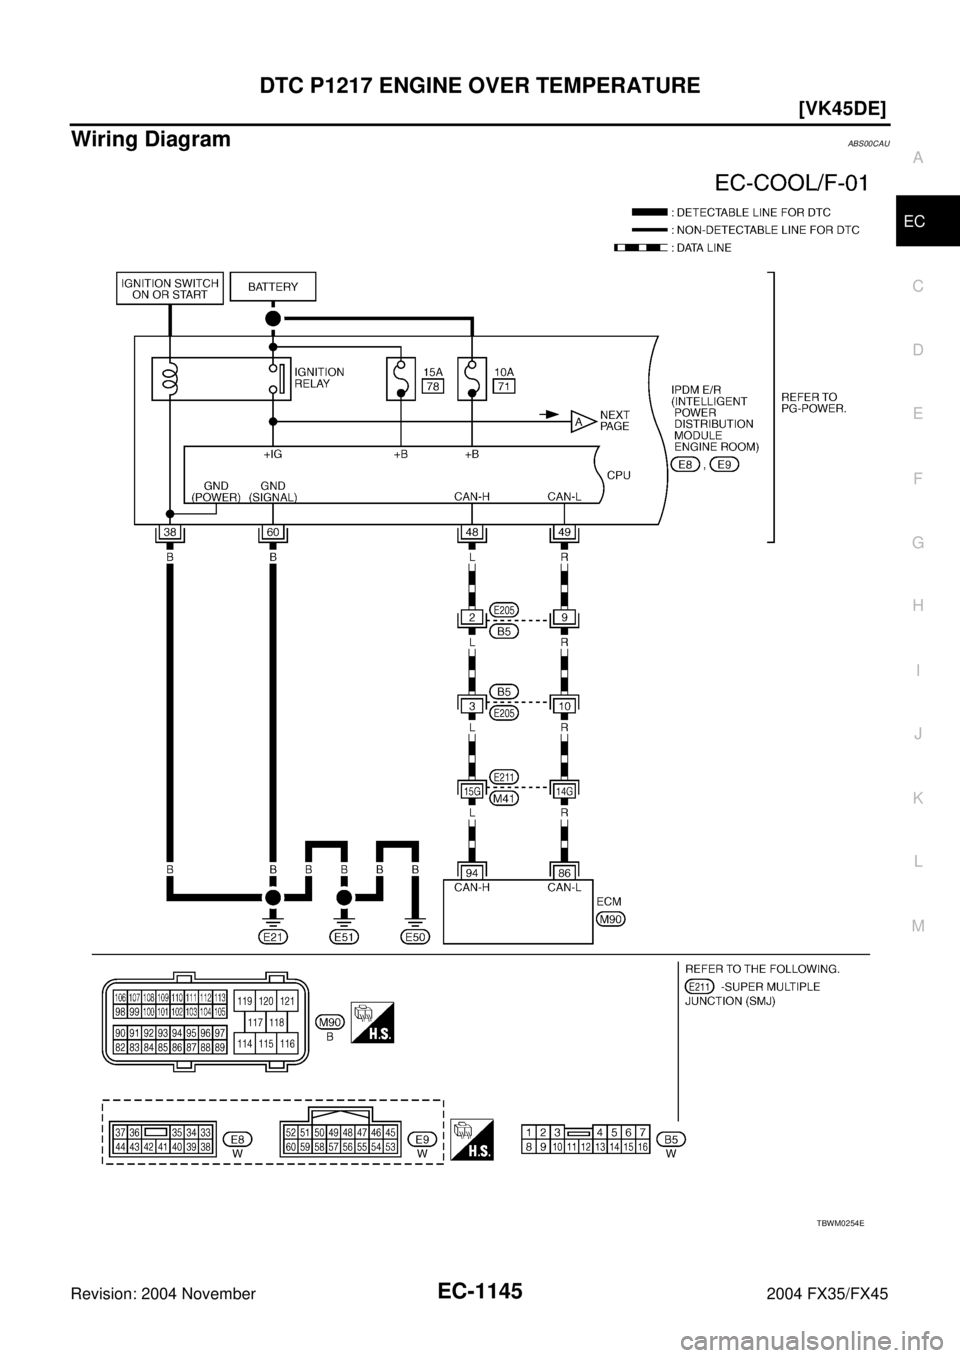 INFINITI FX35 2004  Service Manual DTC P1217 ENGINE OVER TEMPERATURE
EC-1145
[VK45DE]
C
D
E
F
G
H
I
J
K
L
MA
EC
Revision: 2004 November 2004 FX35/FX45
Wiring DiagramABS00CAU
TBWM0254E 